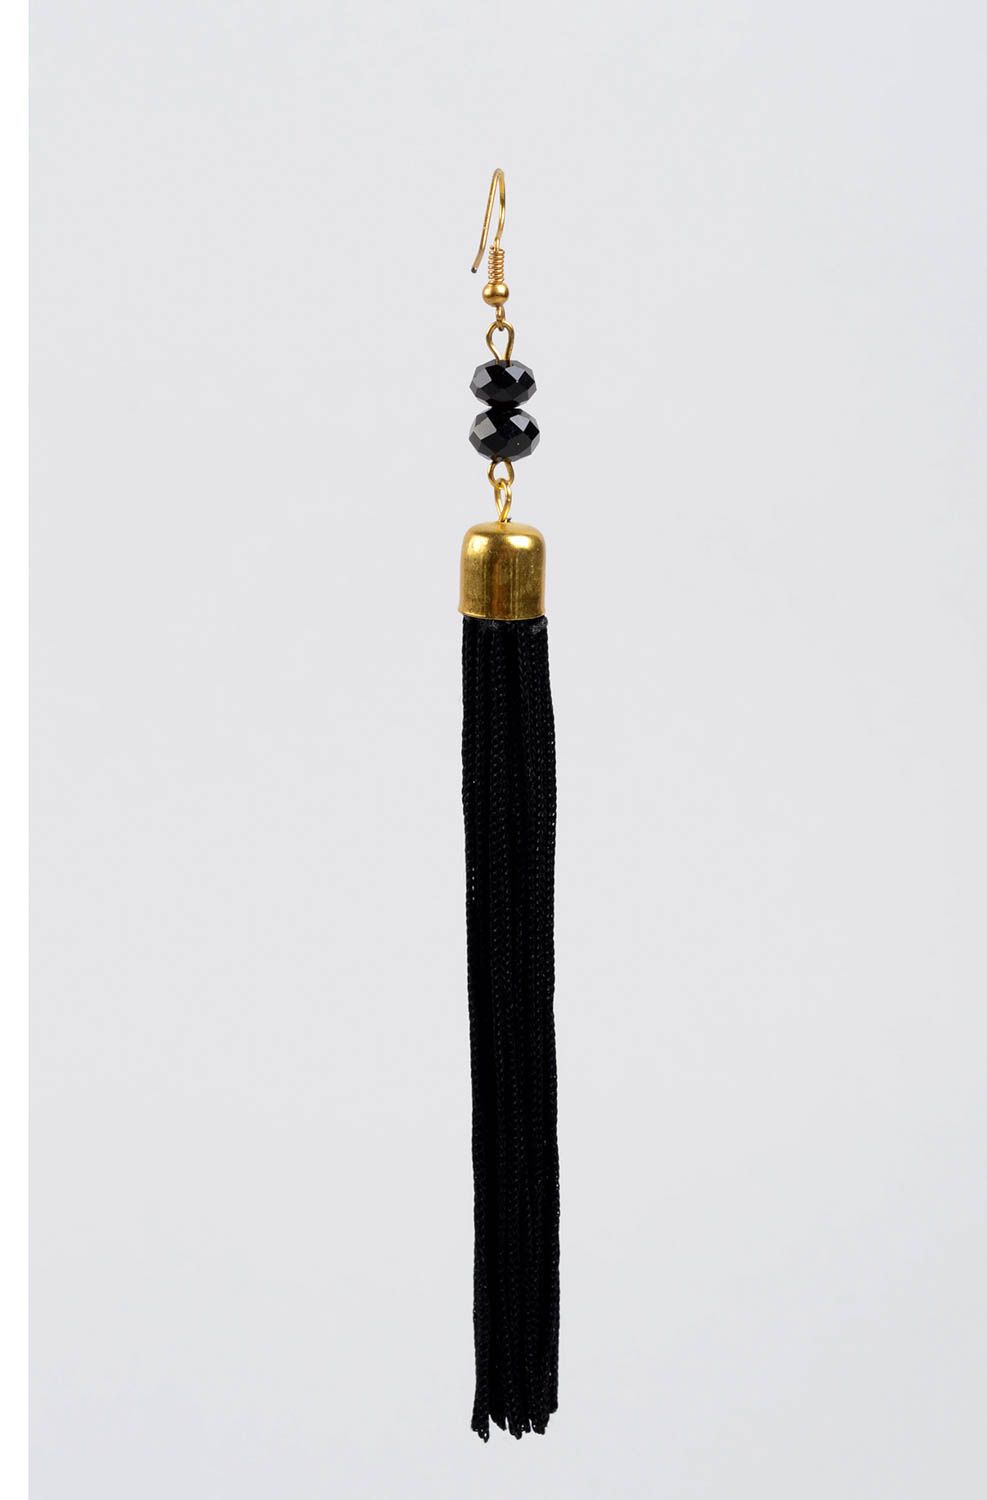 Handmade jewelry long earrings dangling earrings fashion accessories gift ideas photo 4